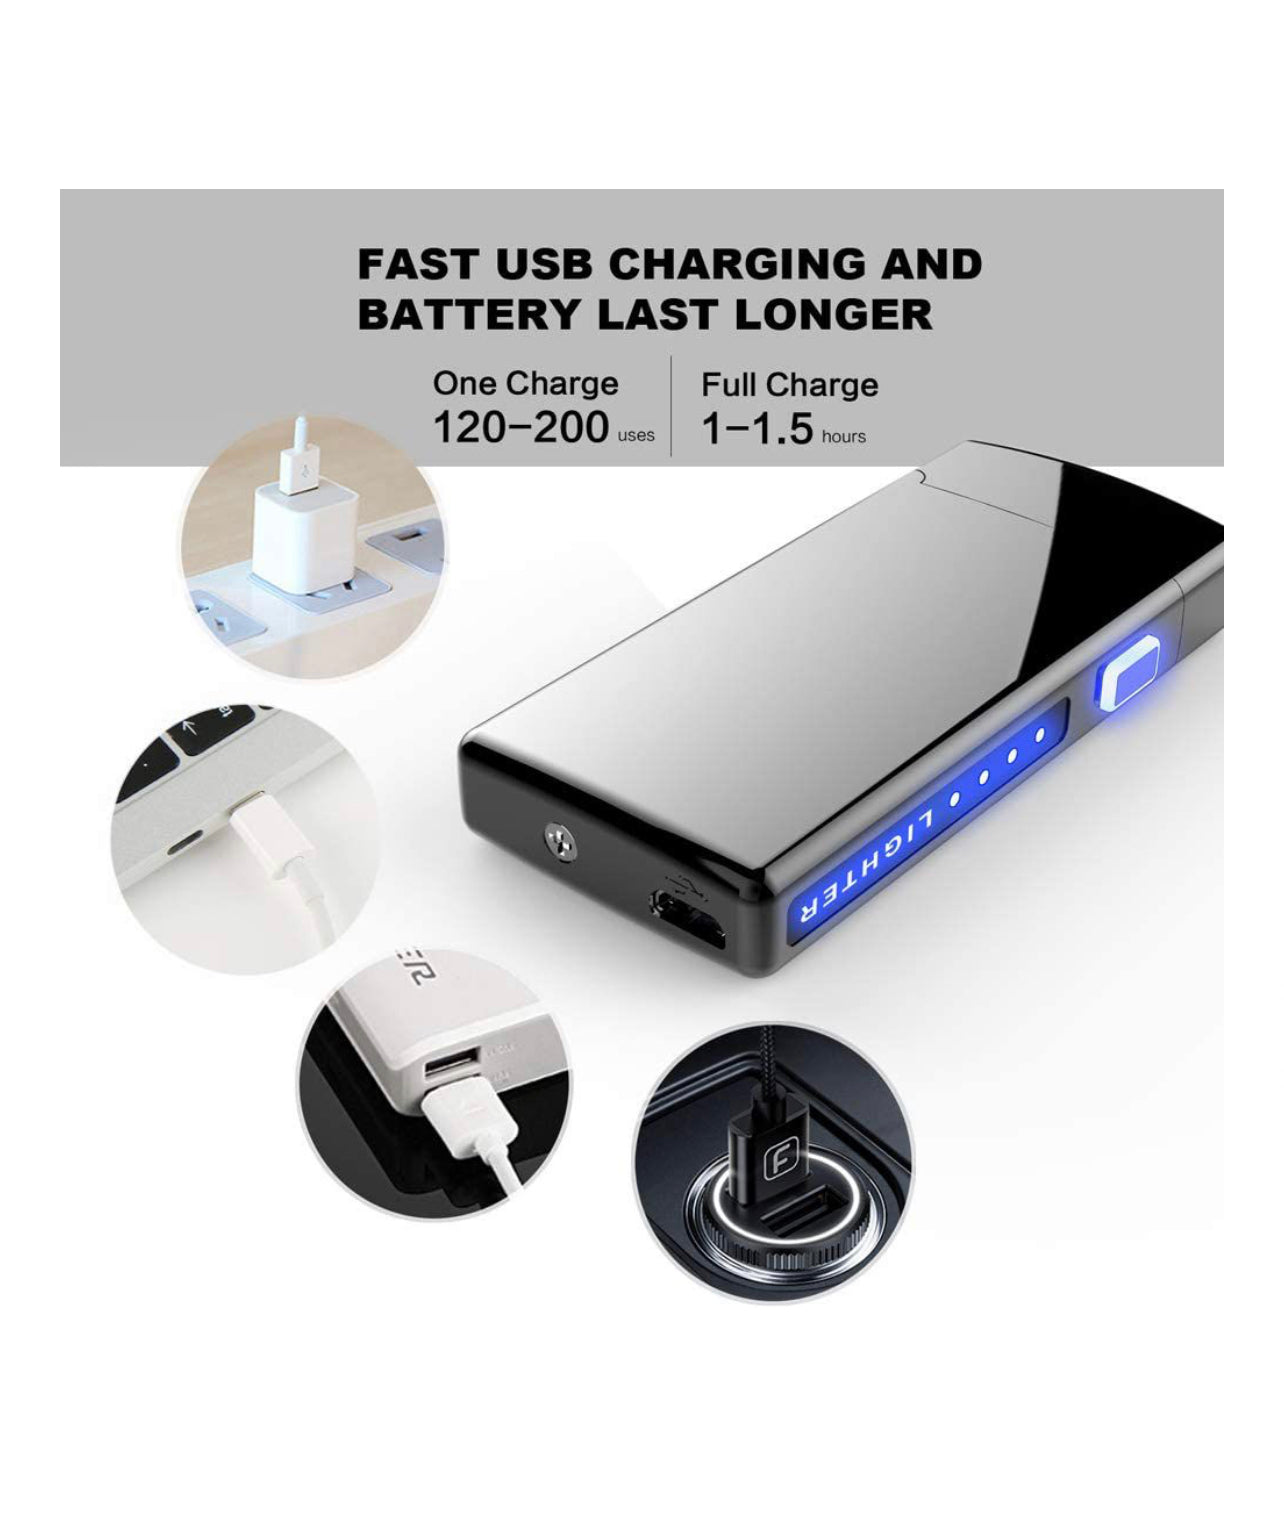 Maisonware Double Arc Plasma Electric Flameless USB Windproof Lighter